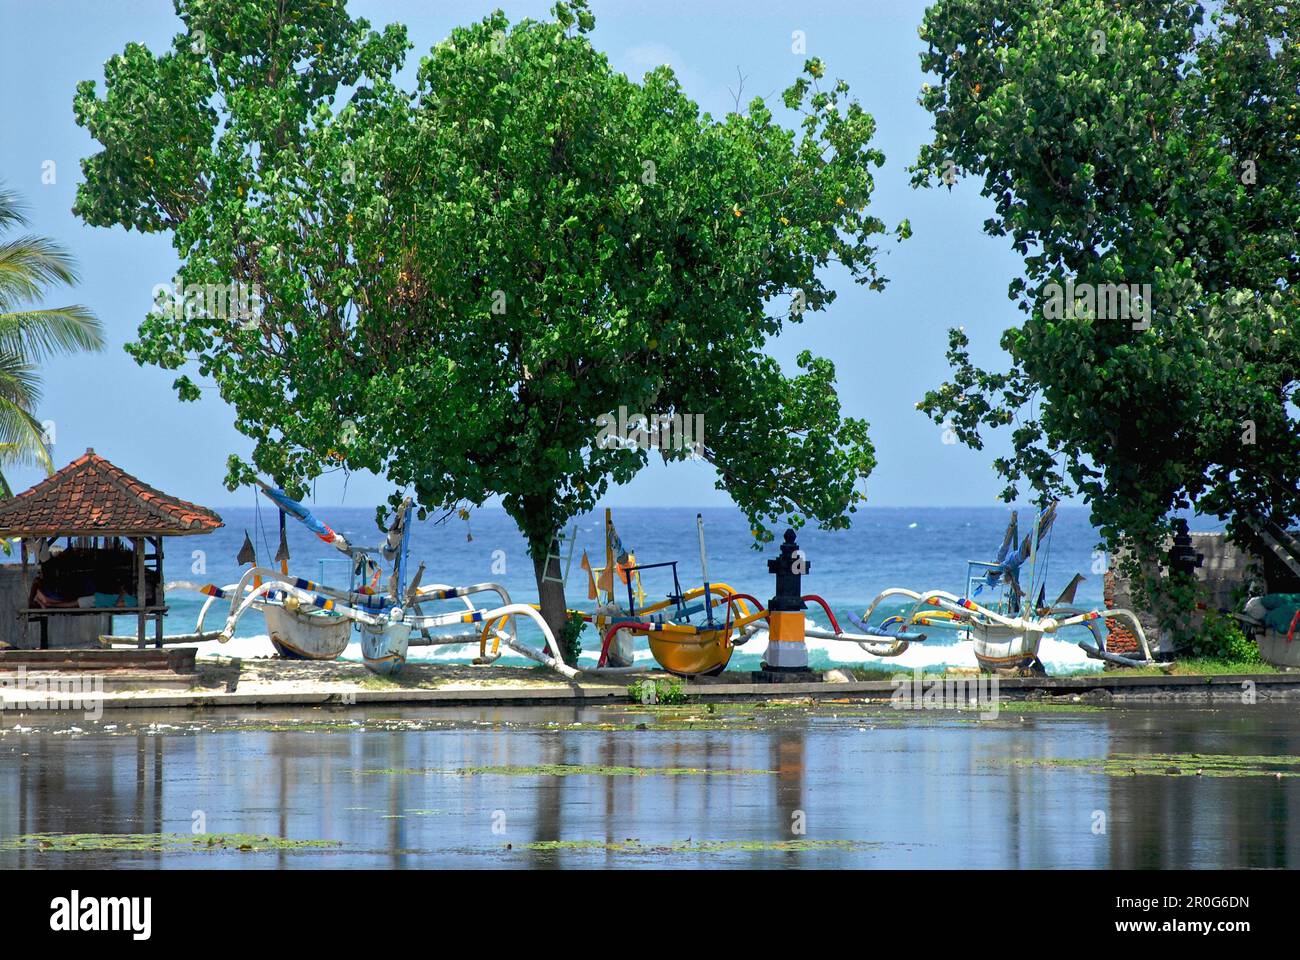 Pond at Candi Dasa with boats on the beach, Candi Dasa, Bali, Indonesia, Asia Stock Photo